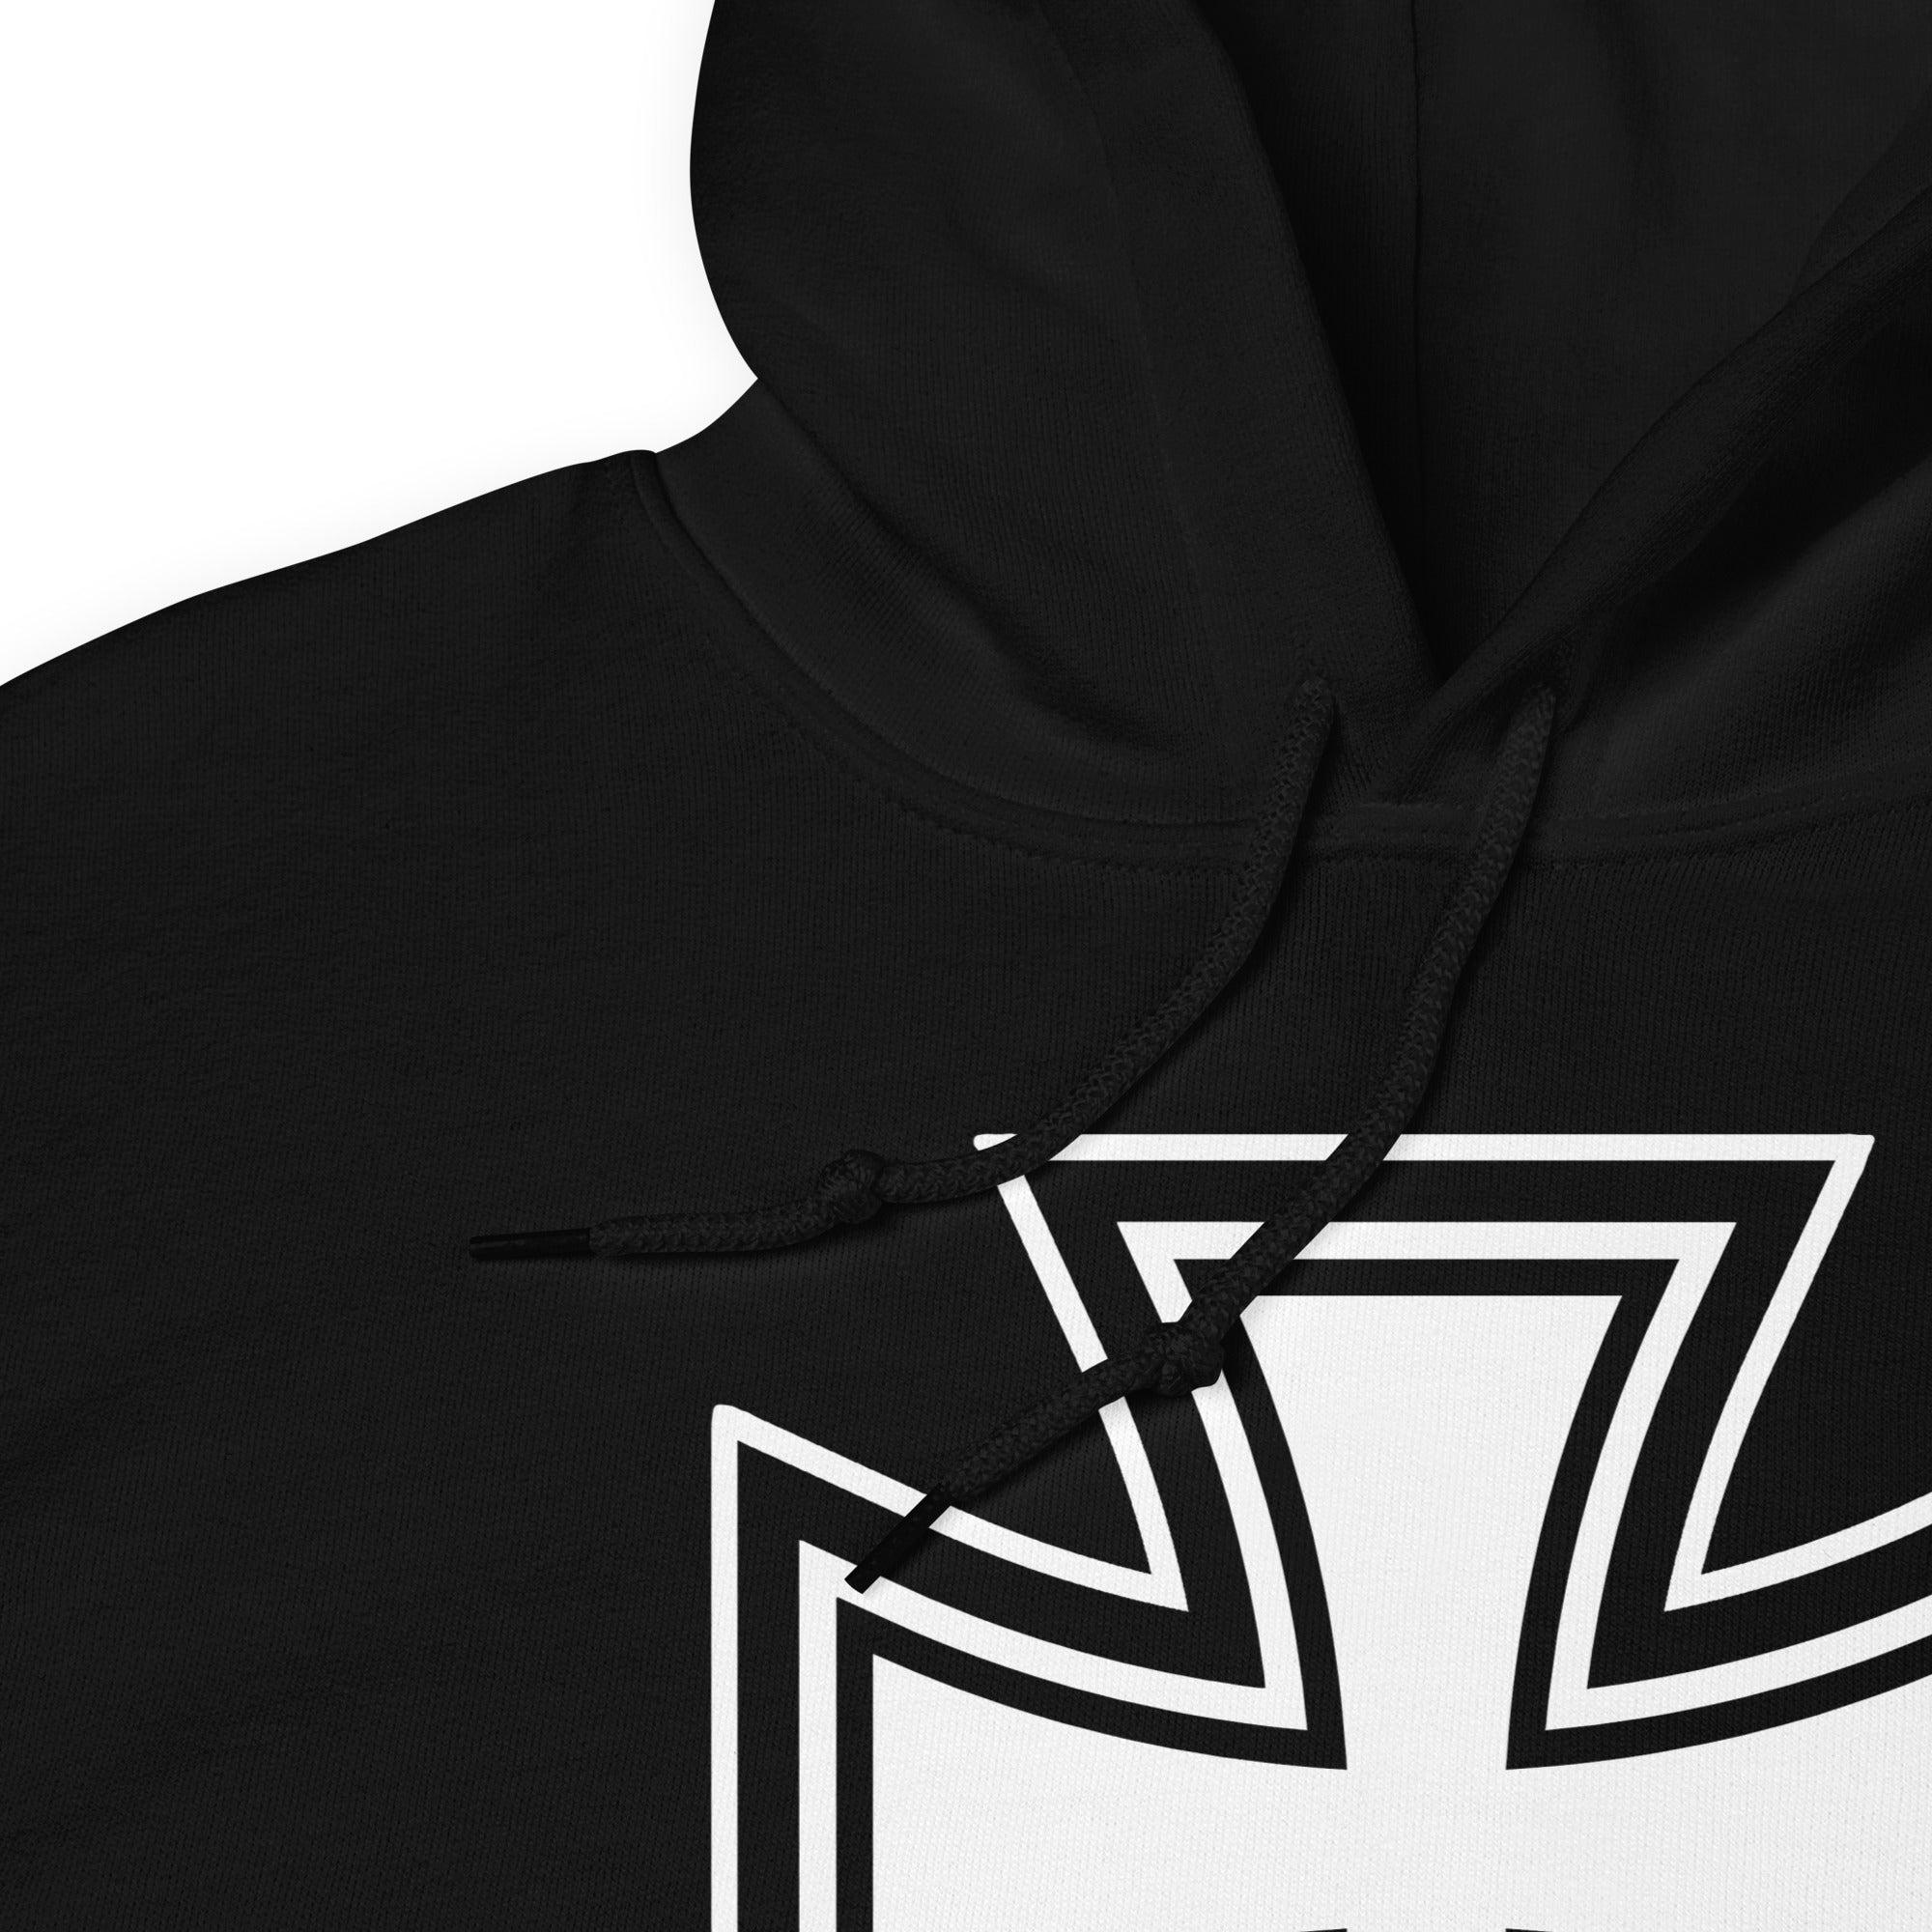 Black and White Occult Biker Cross Symbol Unisex Hoodie Sweatshirt